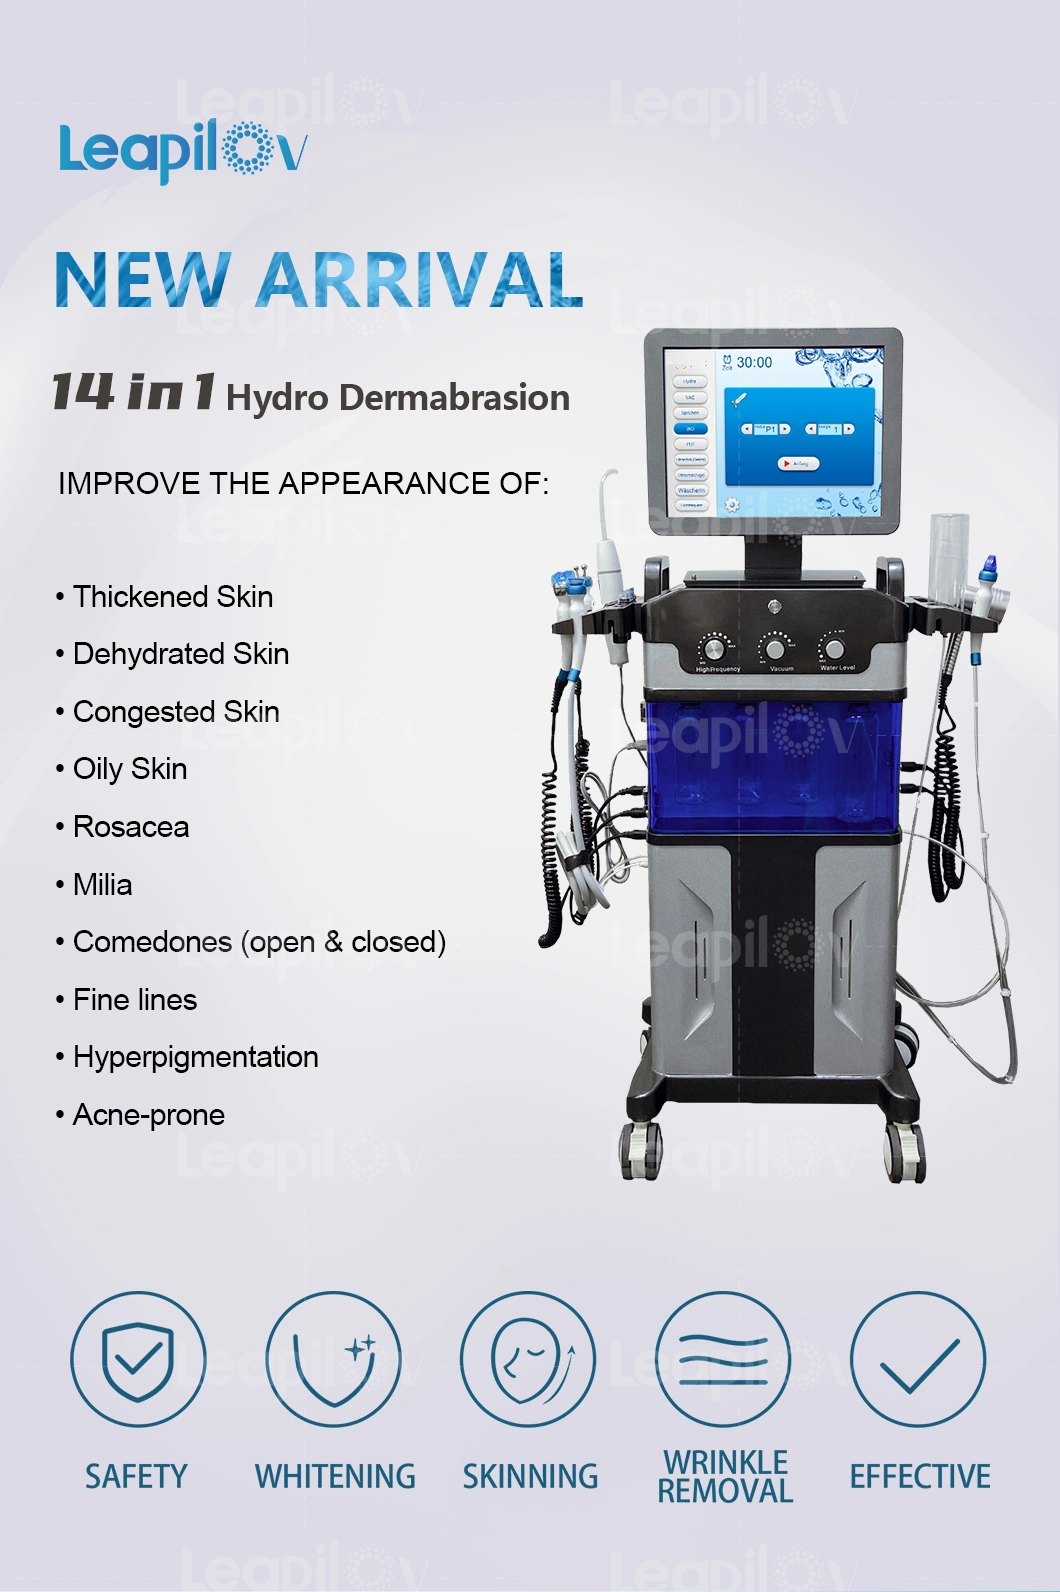 New Multifunction Beauty Salon Hydra Oxygen Skin Care Machine